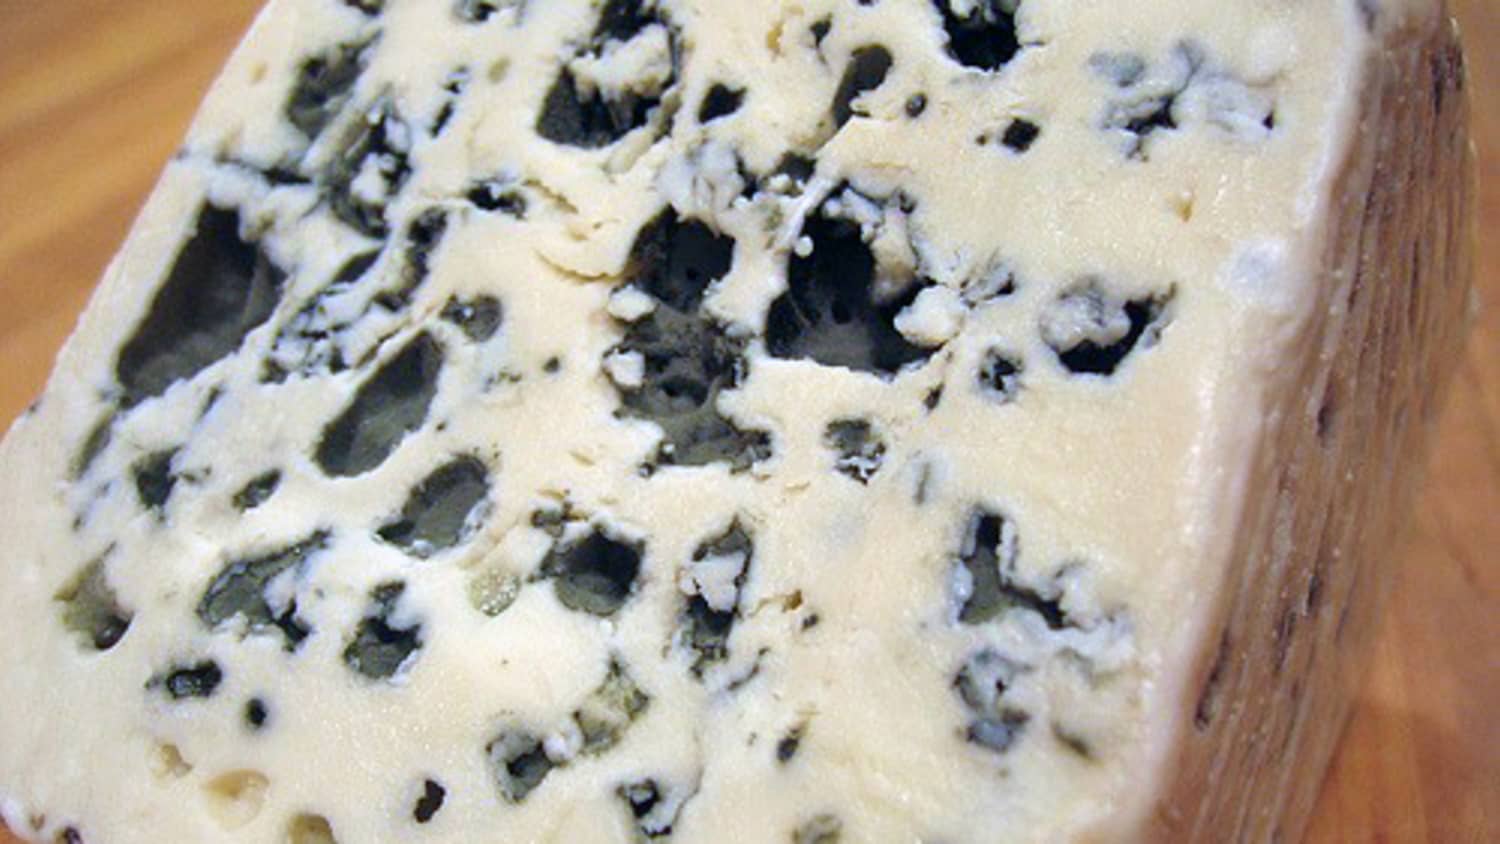 divisive foods - Blue cheeseI